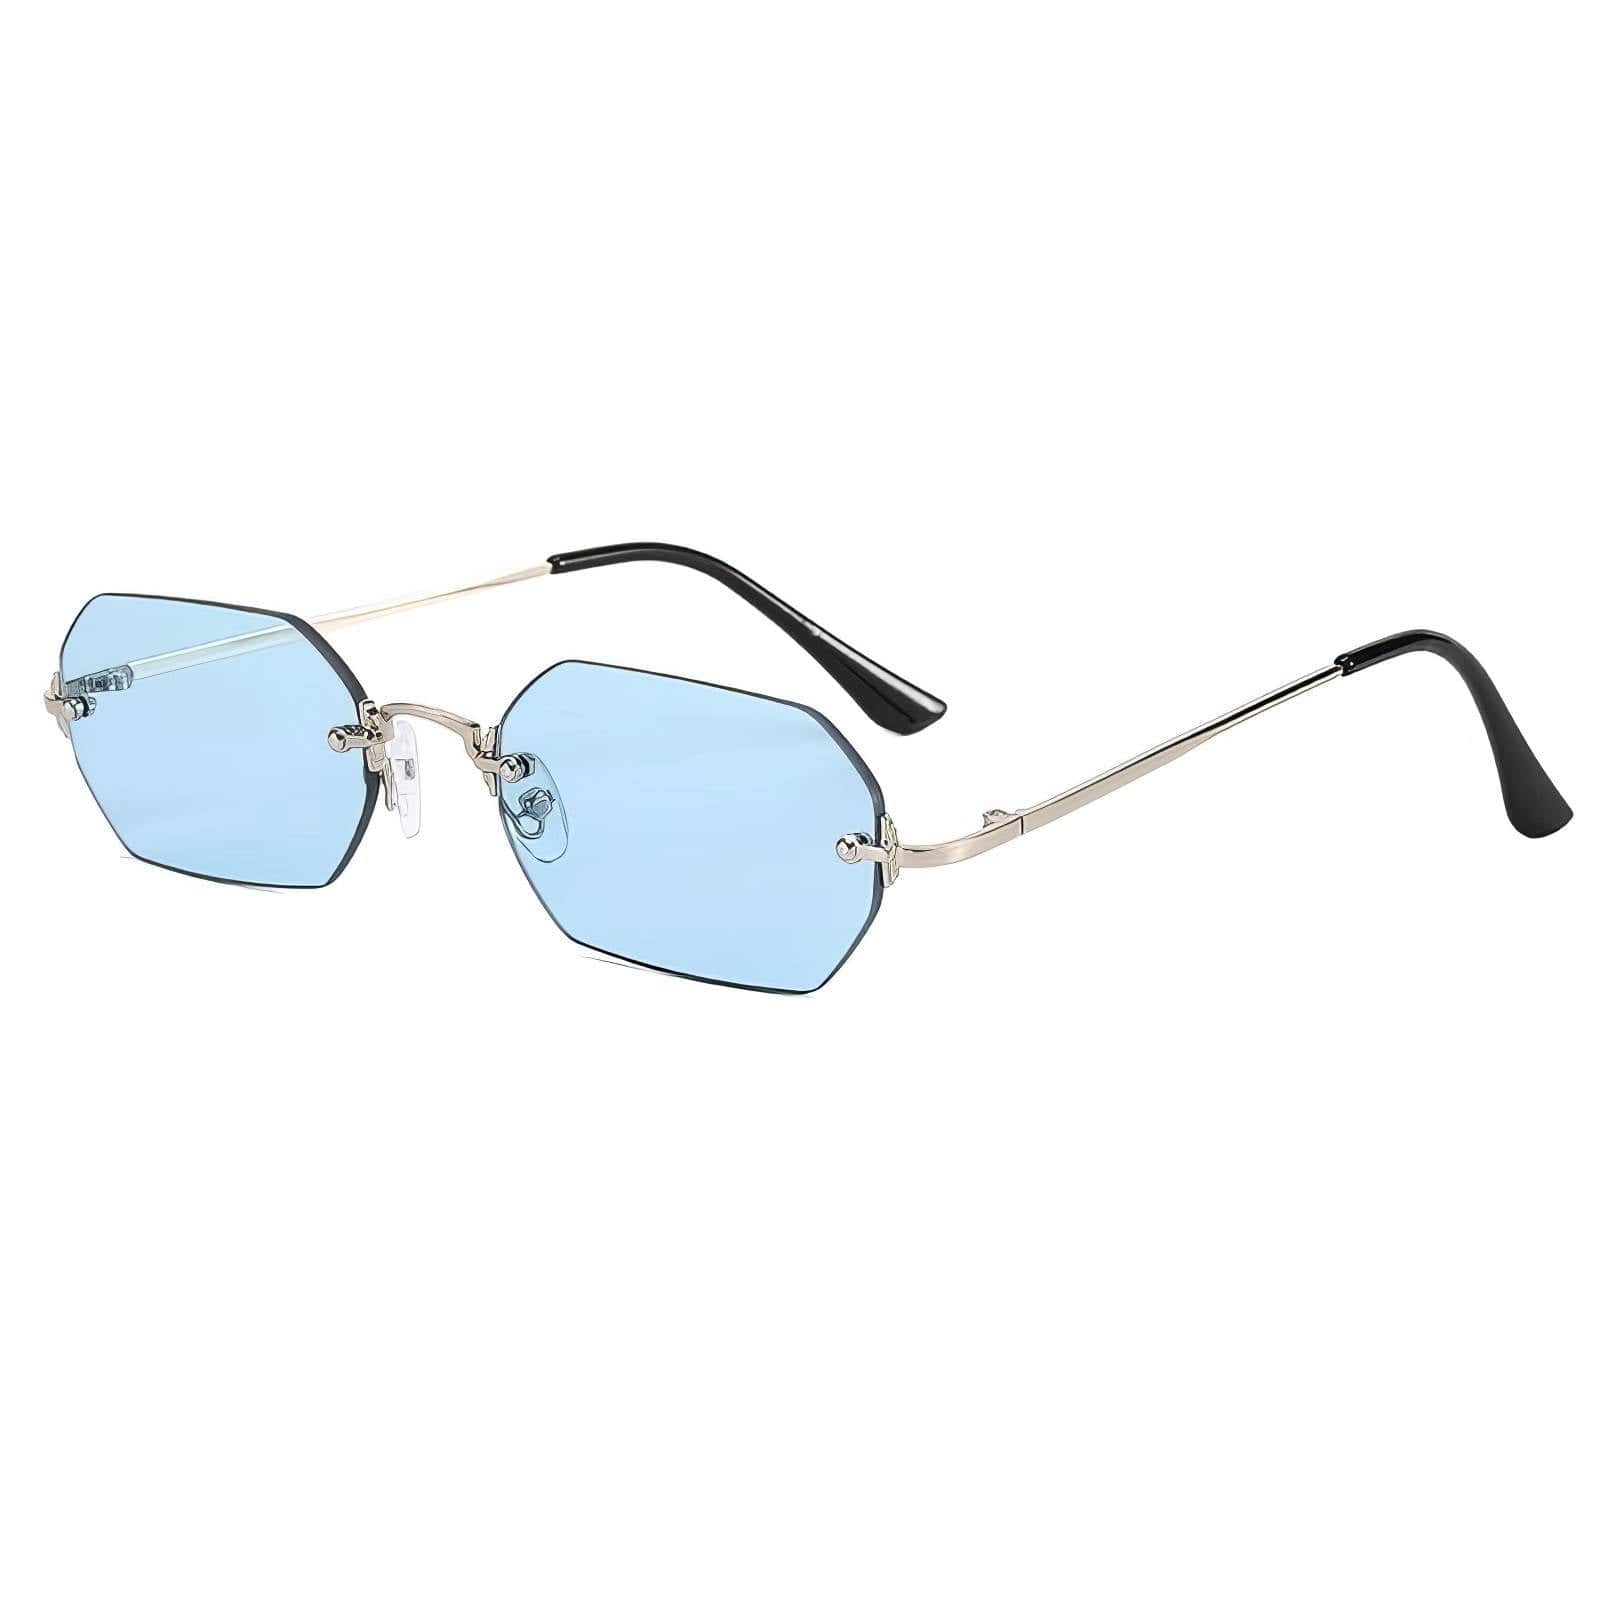 Titanium Geometric Rimless Tinted Sunglasses Blue/Silver / Resin